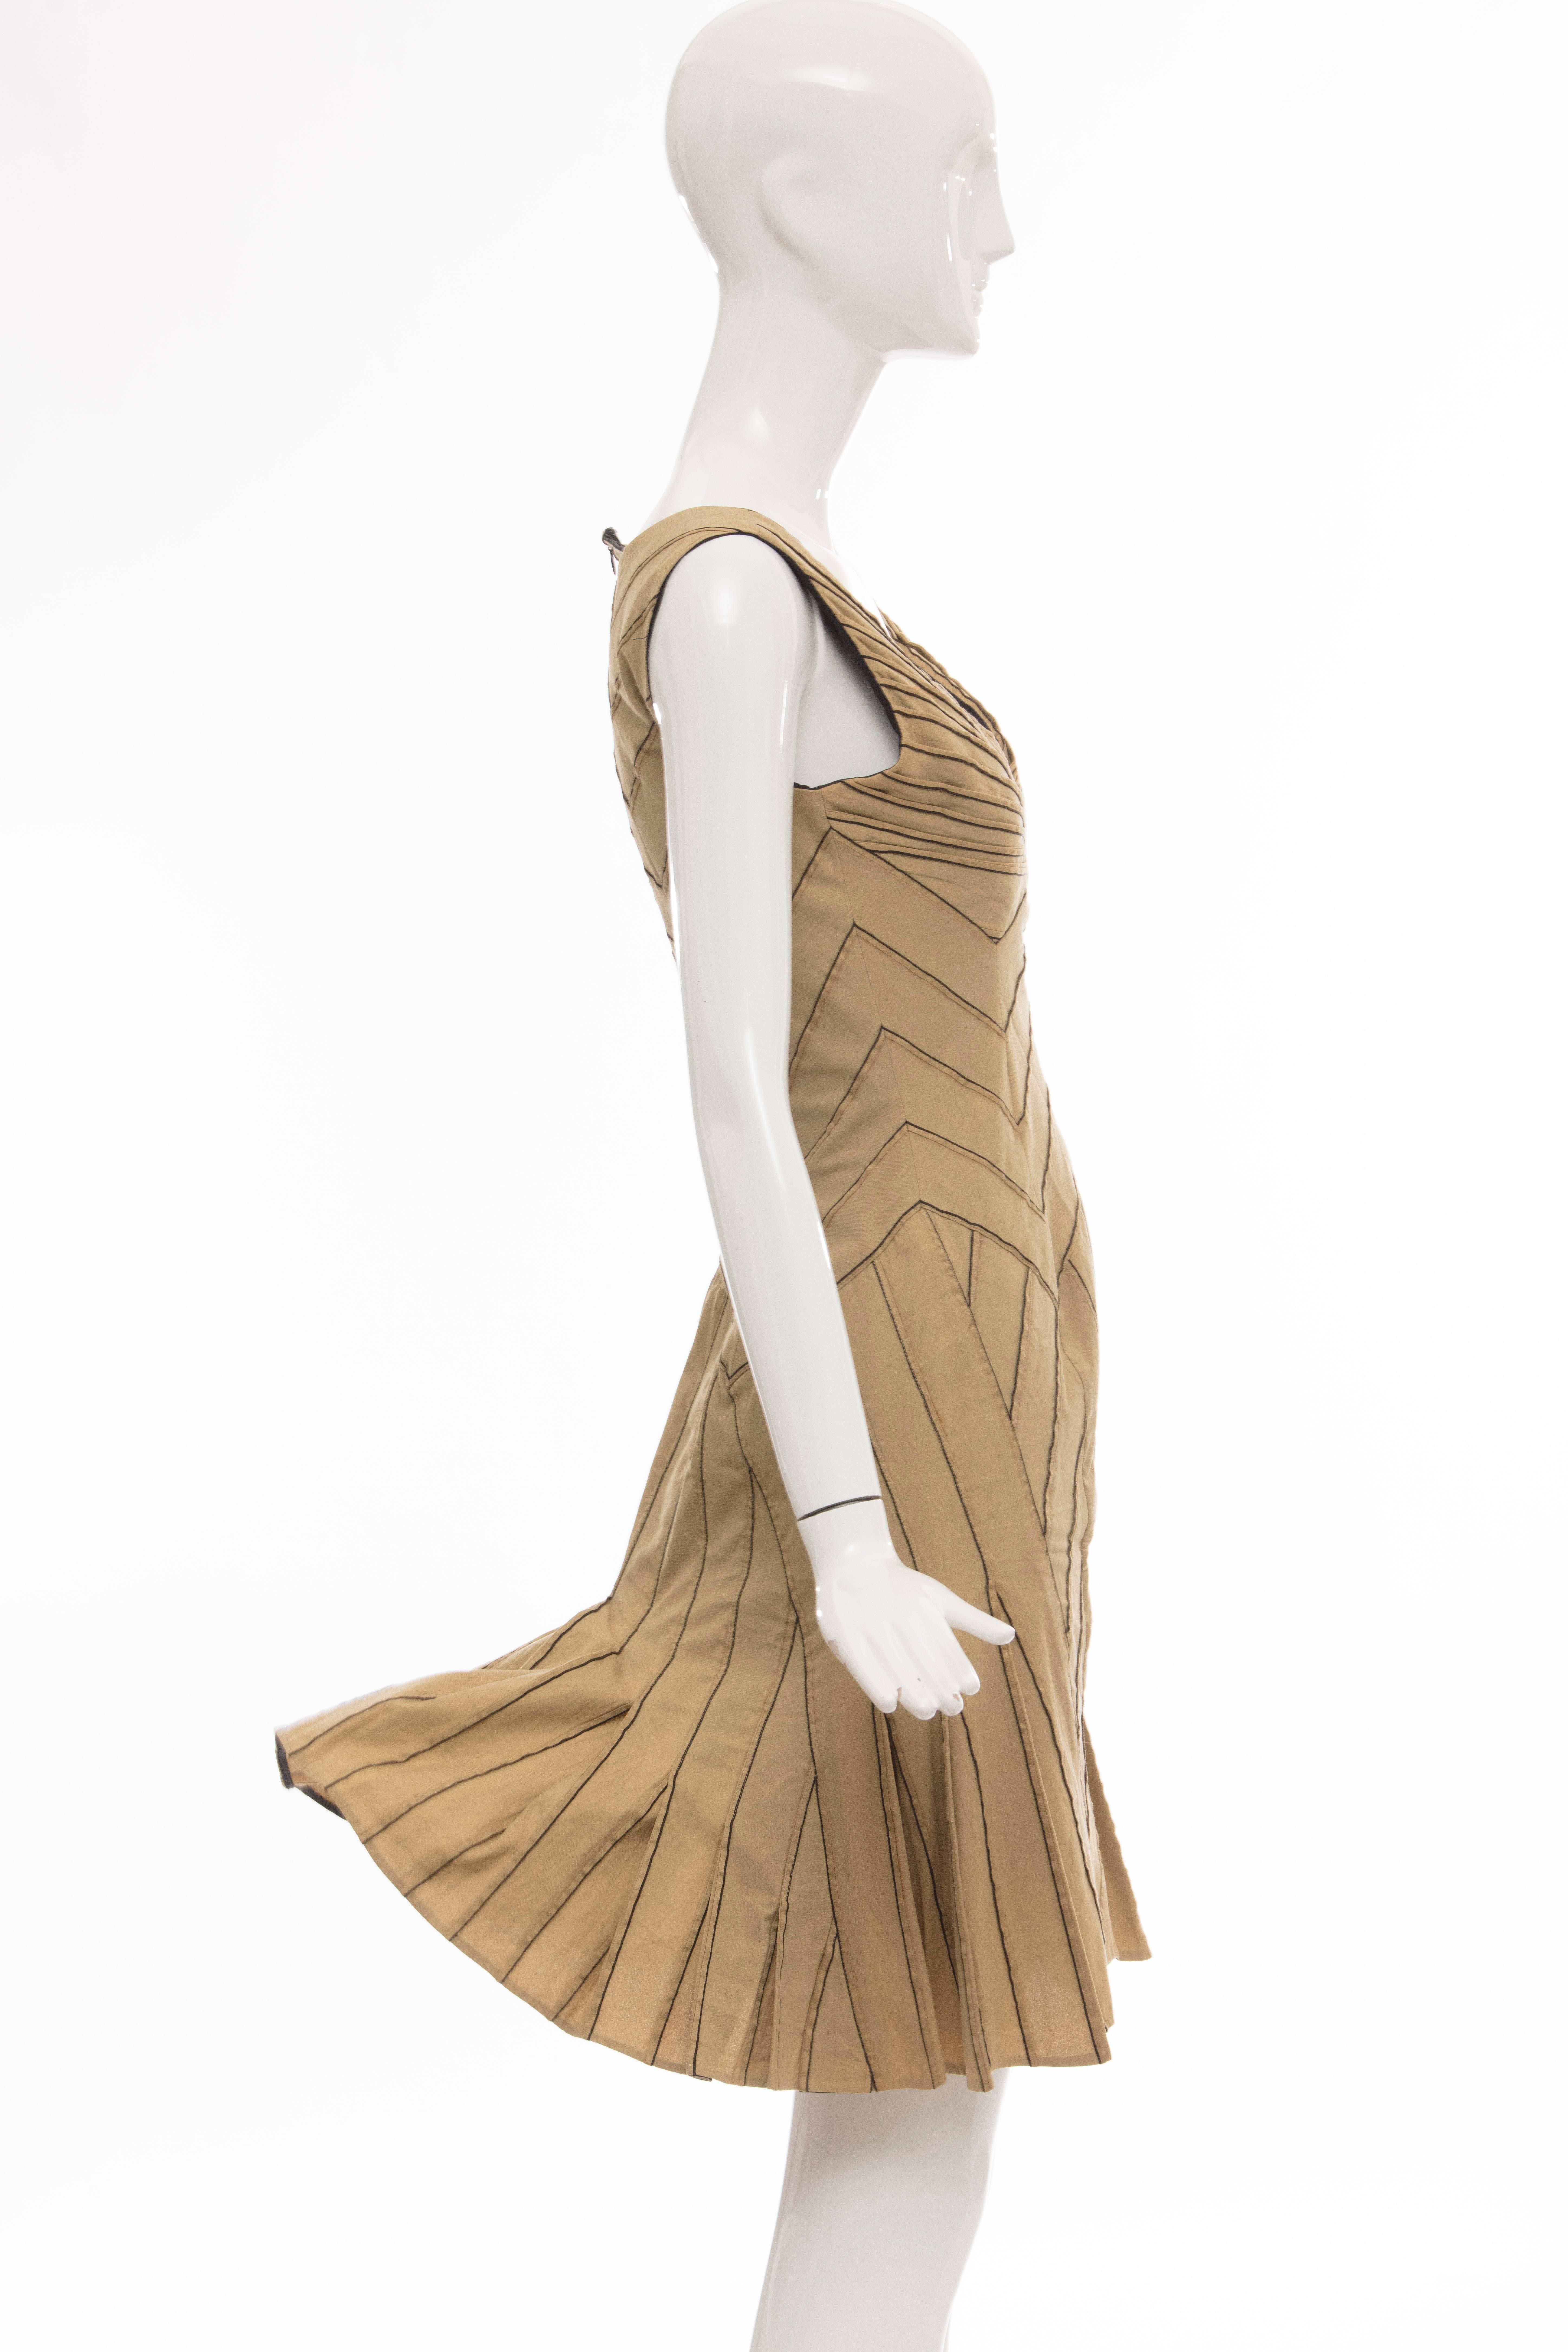 Zac Posen Silk Cotton Khaki Runway Dress, Spring 2003 For Sale 2